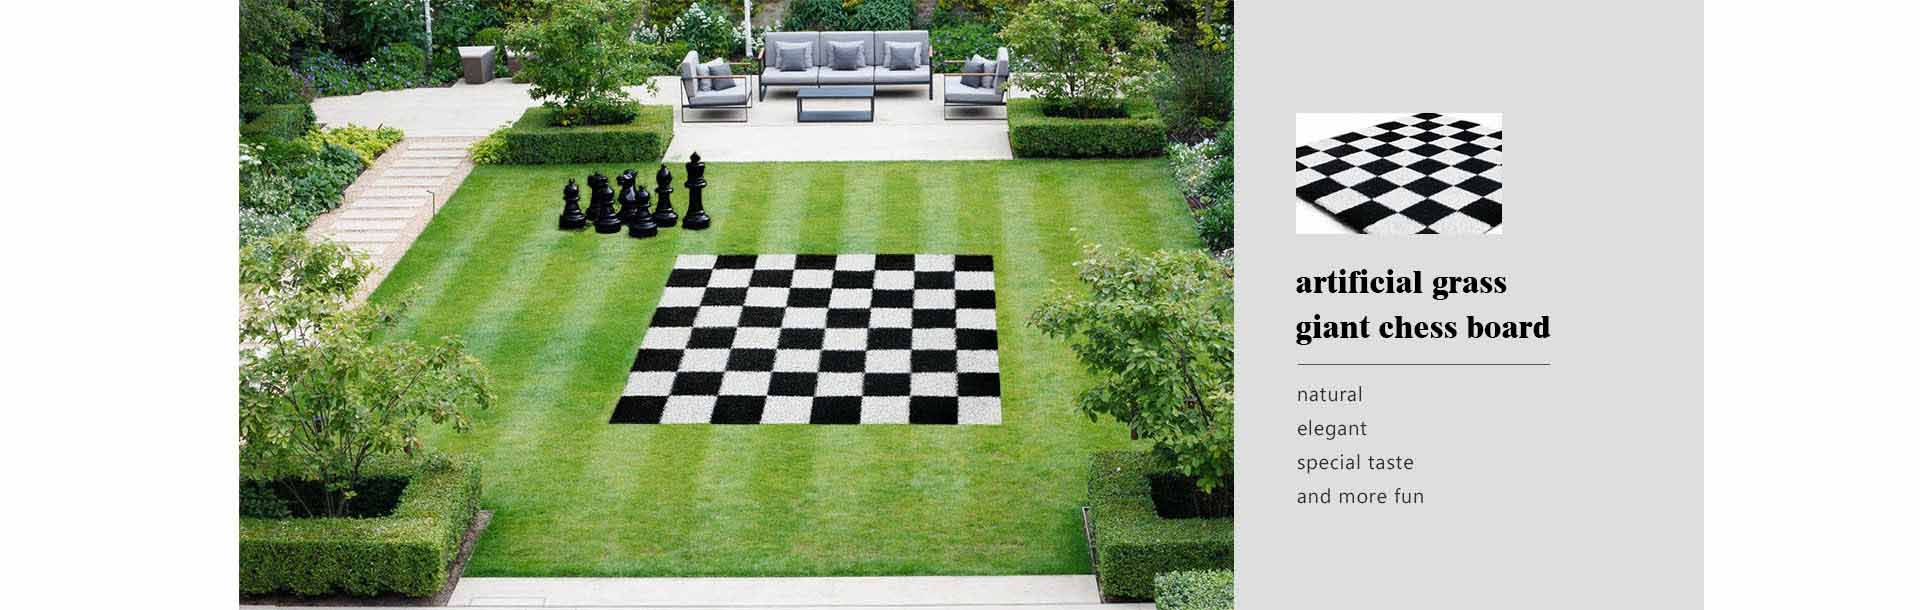 human-size grass chess board